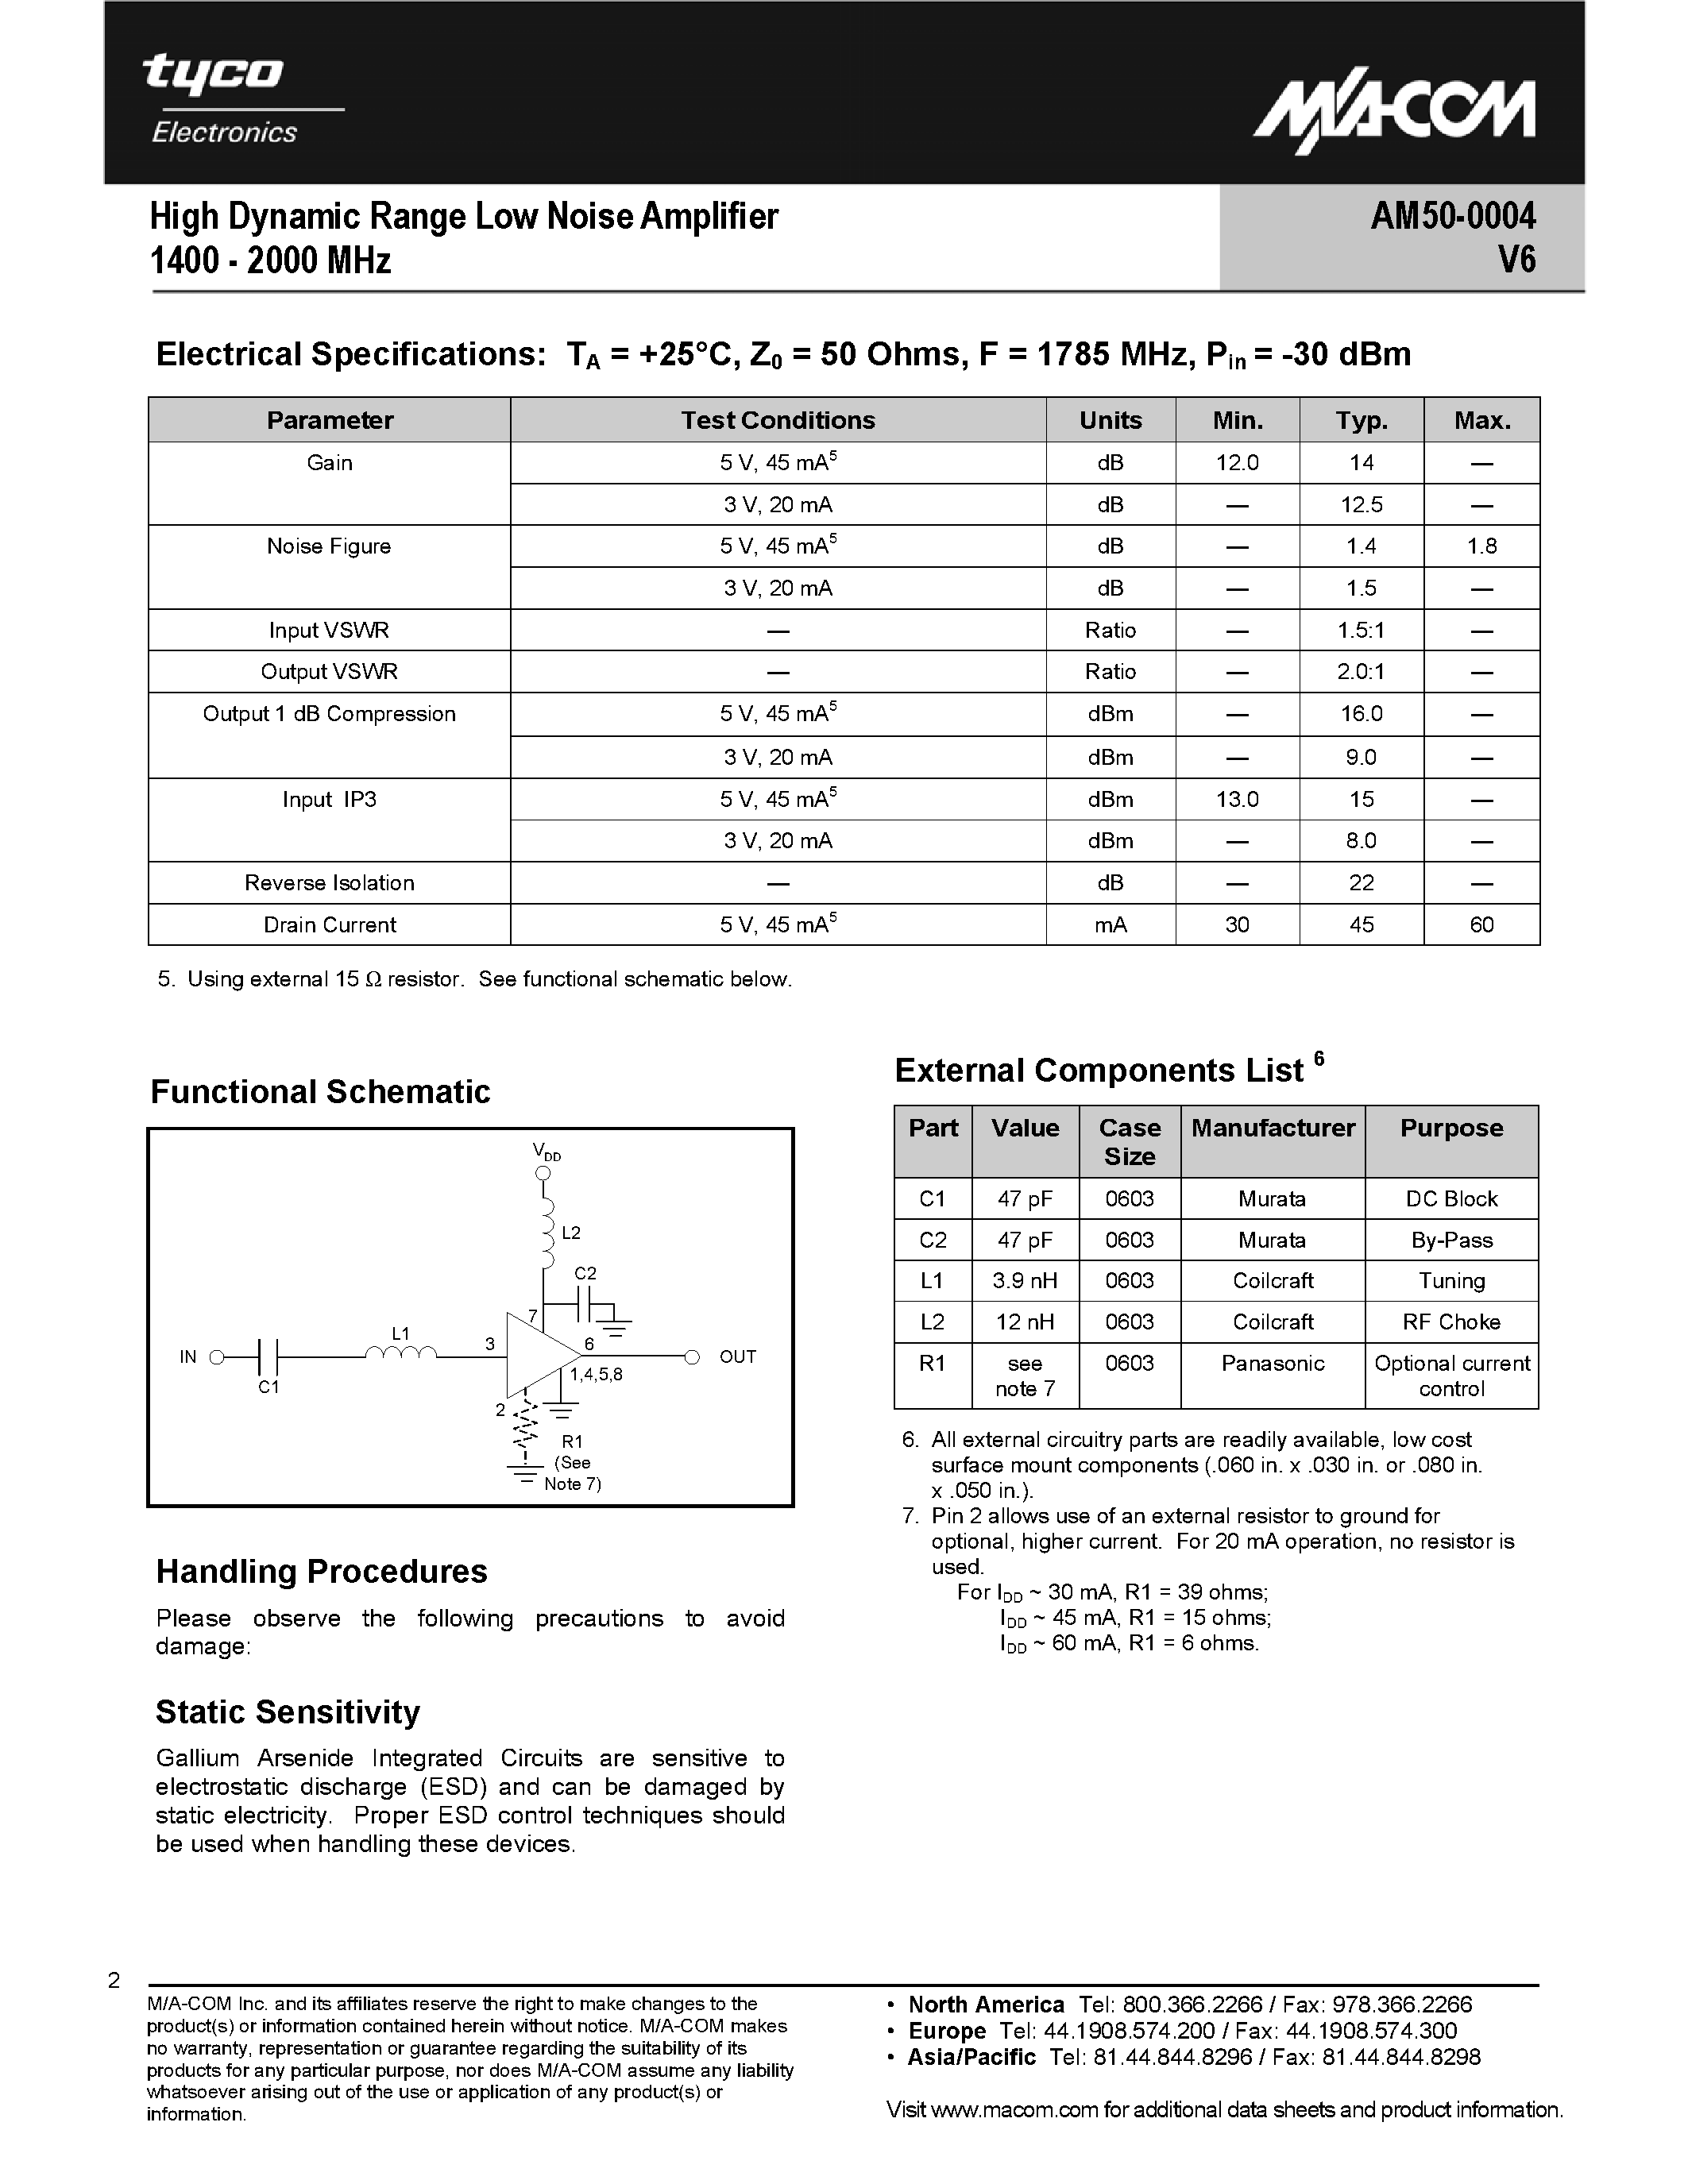 Datasheet AM50-0004V6 - High Dynamic Range Low Noise Amplifier page 2